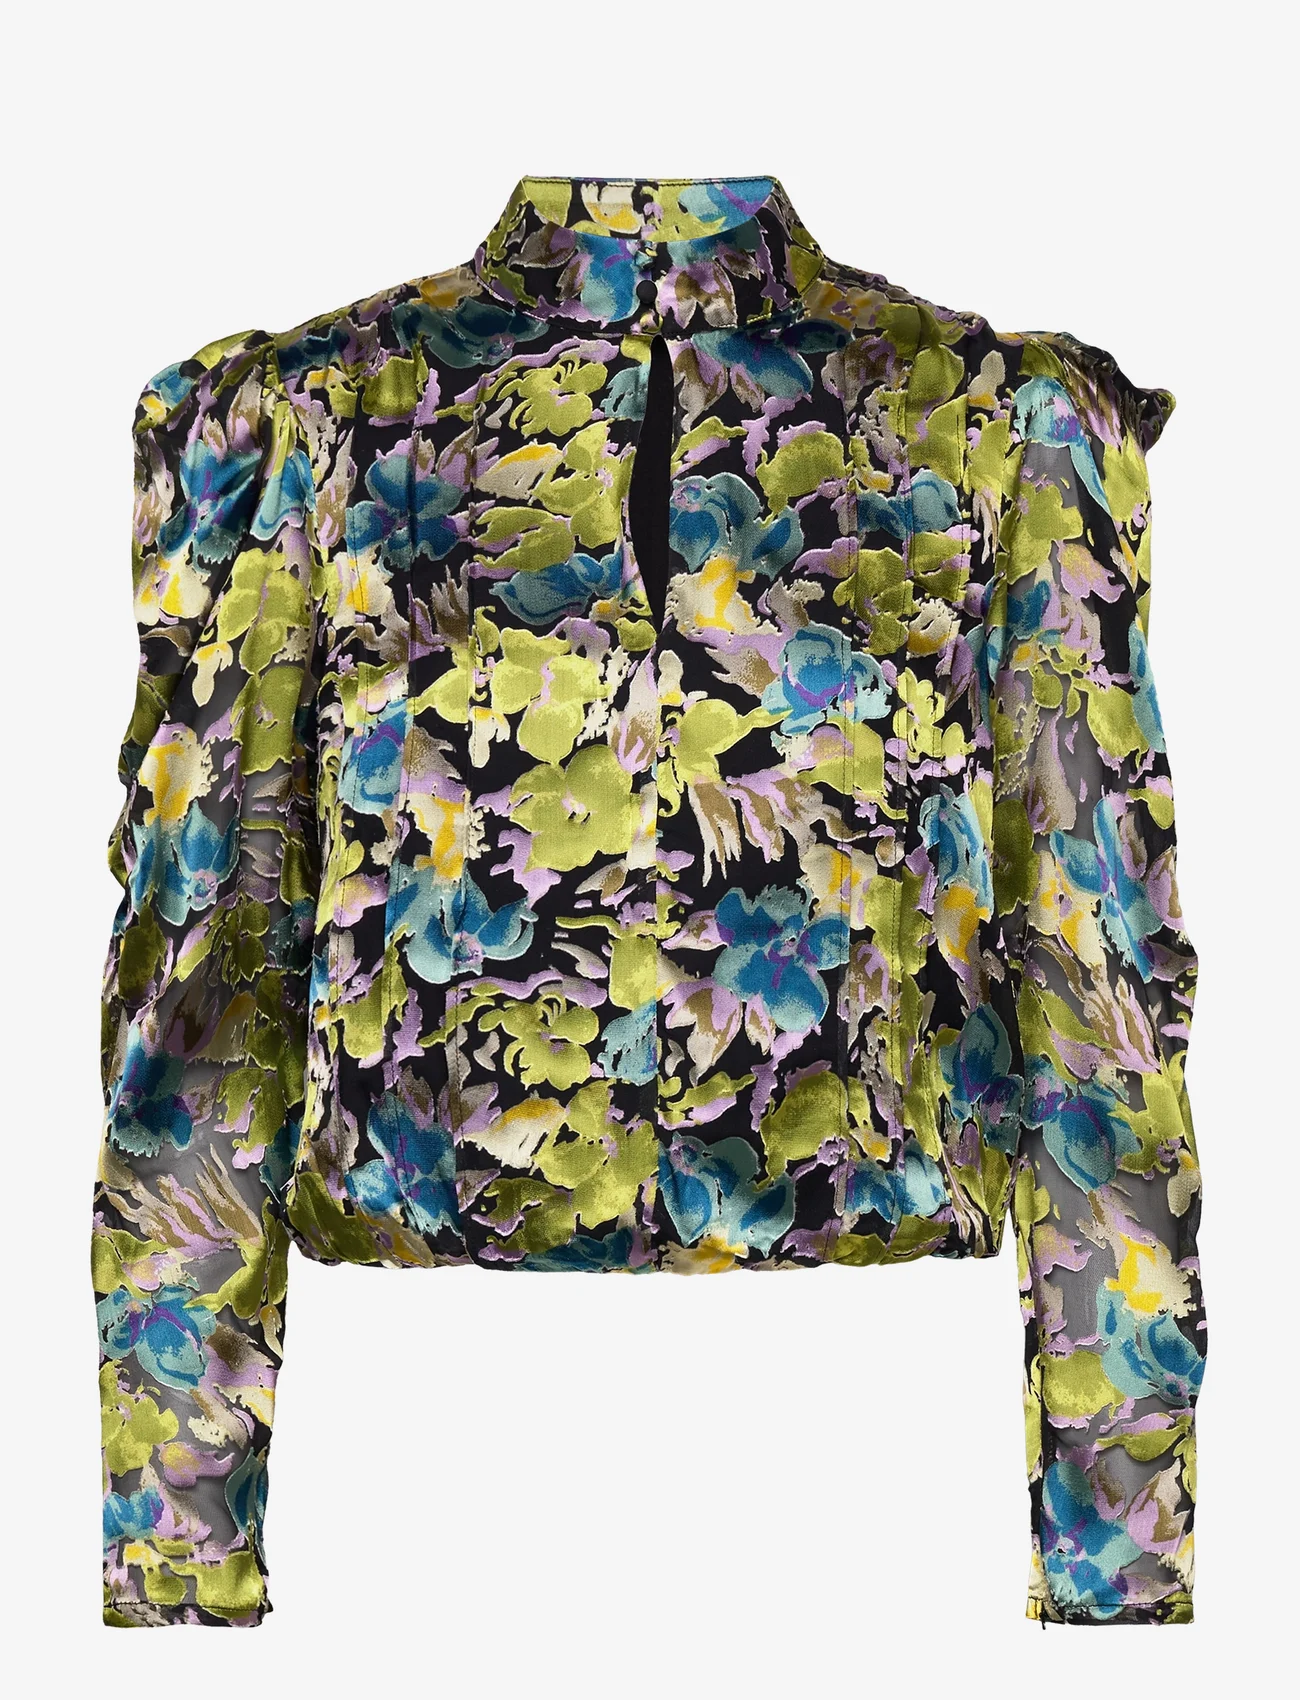 Gestuz - FloriaGZ blouse - bluzki z długimi rękawami - blue green multi floral - 0